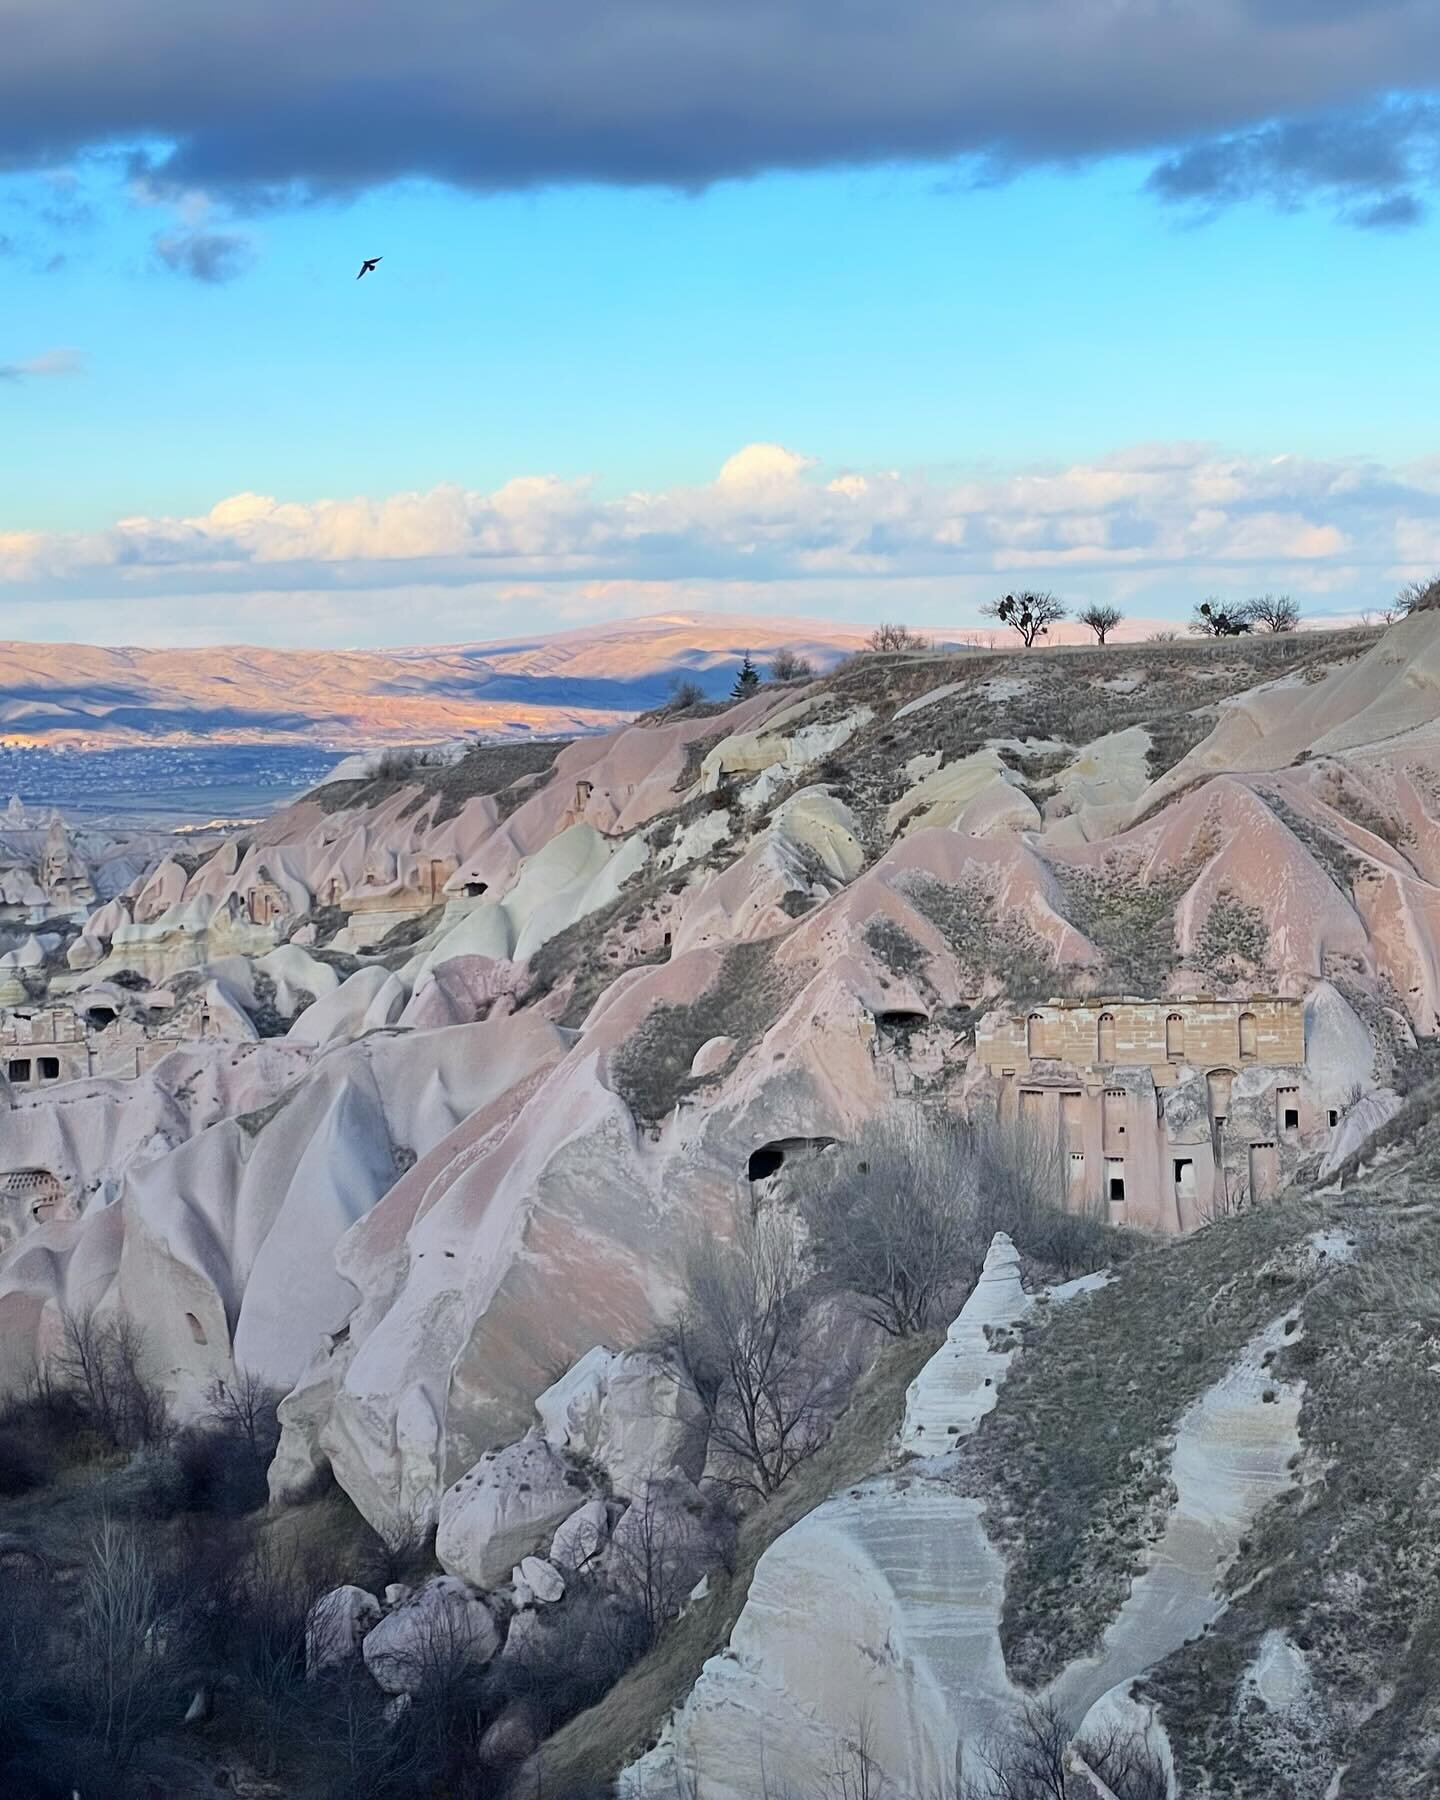 Istanbul - Cappadocia - Bodrum
.
#catsofistanbul #sketchbook #istanbul #cappadocia #turkey #ancientcity